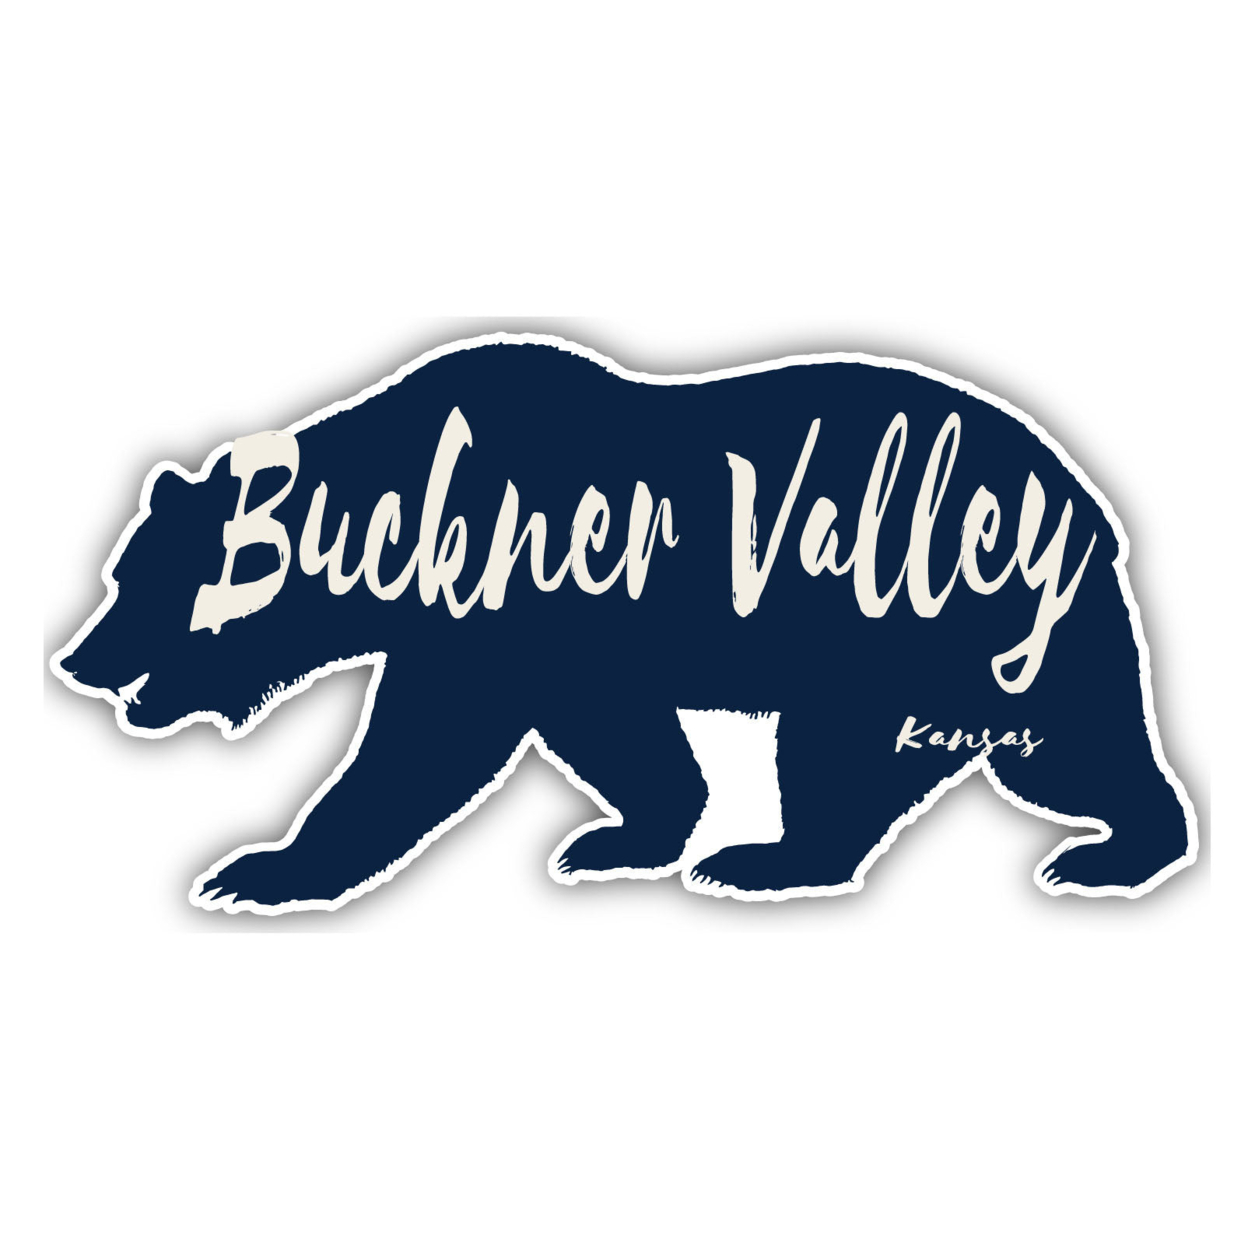 Buckner Valley Kansas Souvenir Decorative Stickers (Choose Theme And Size) - 4-Pack, 4-Inch, Bear